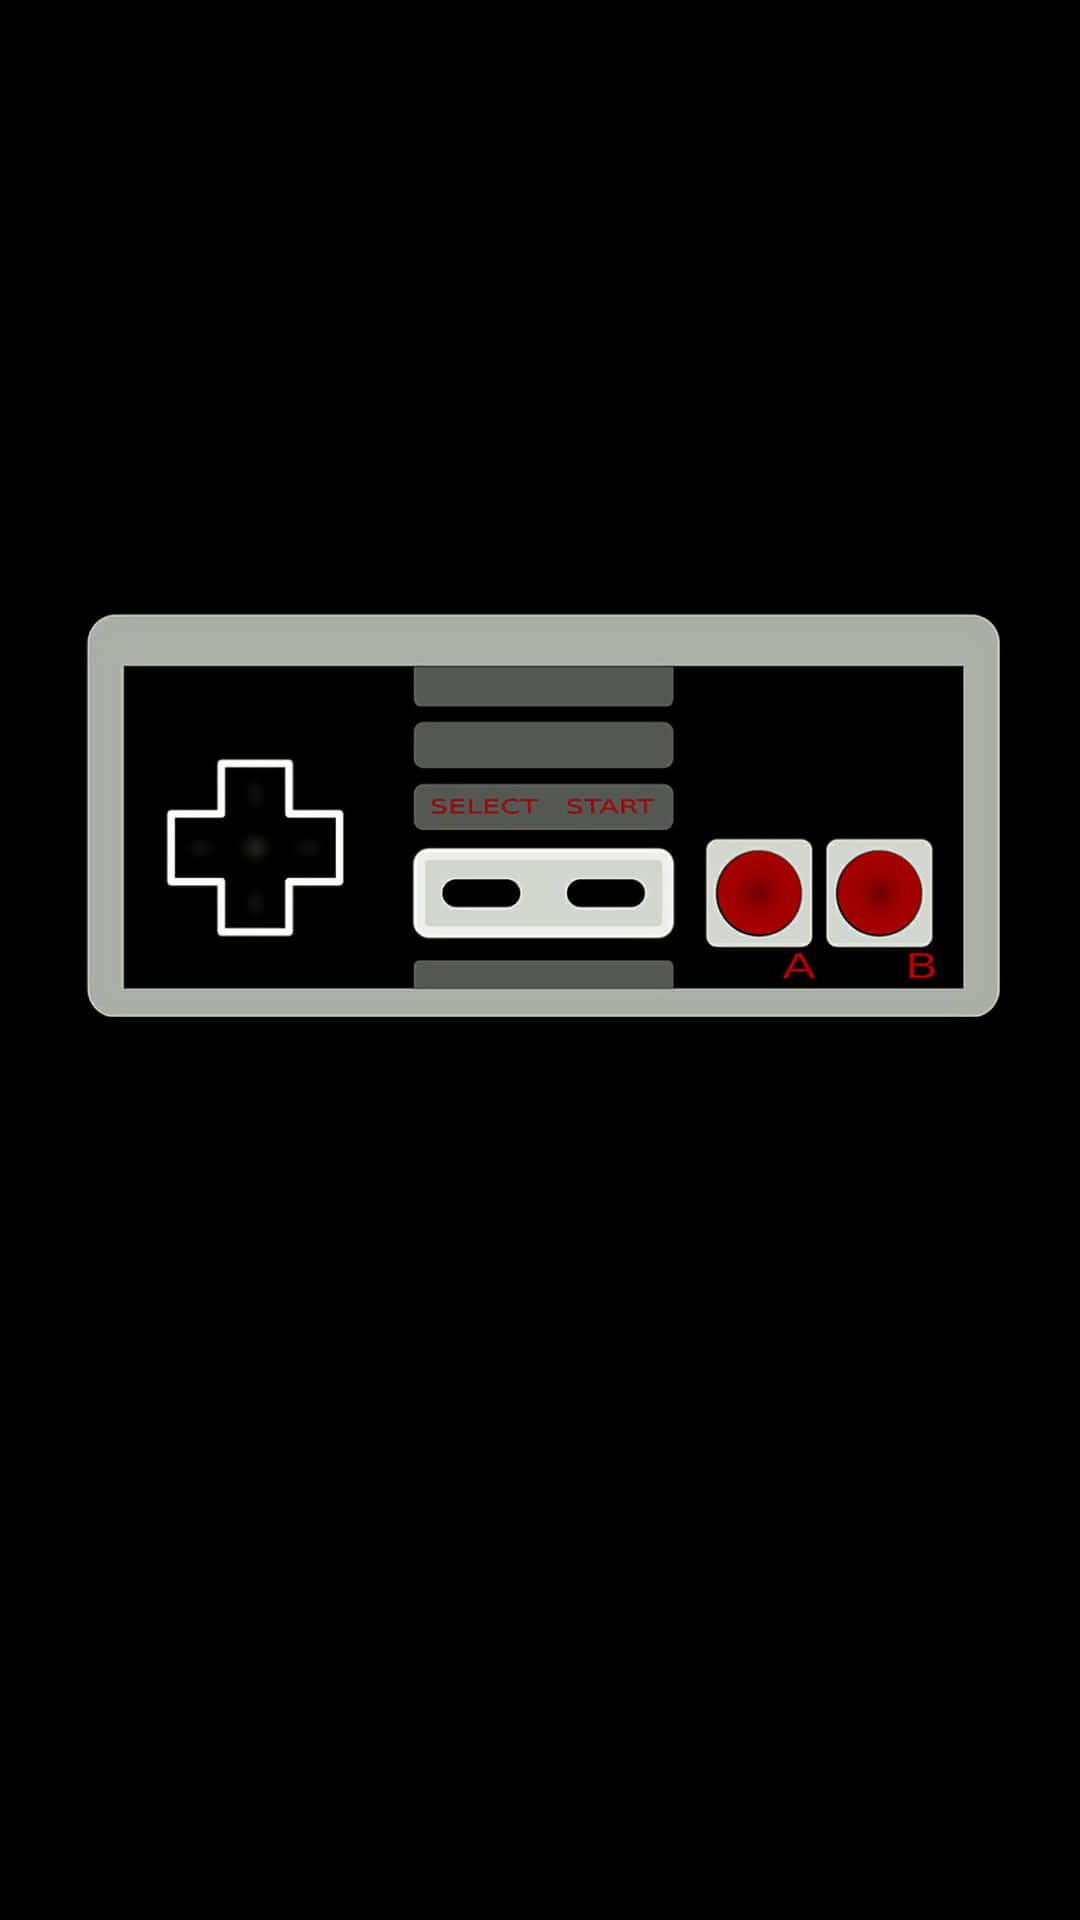 A Nintendo Game Controller On A Black Background Wallpaper